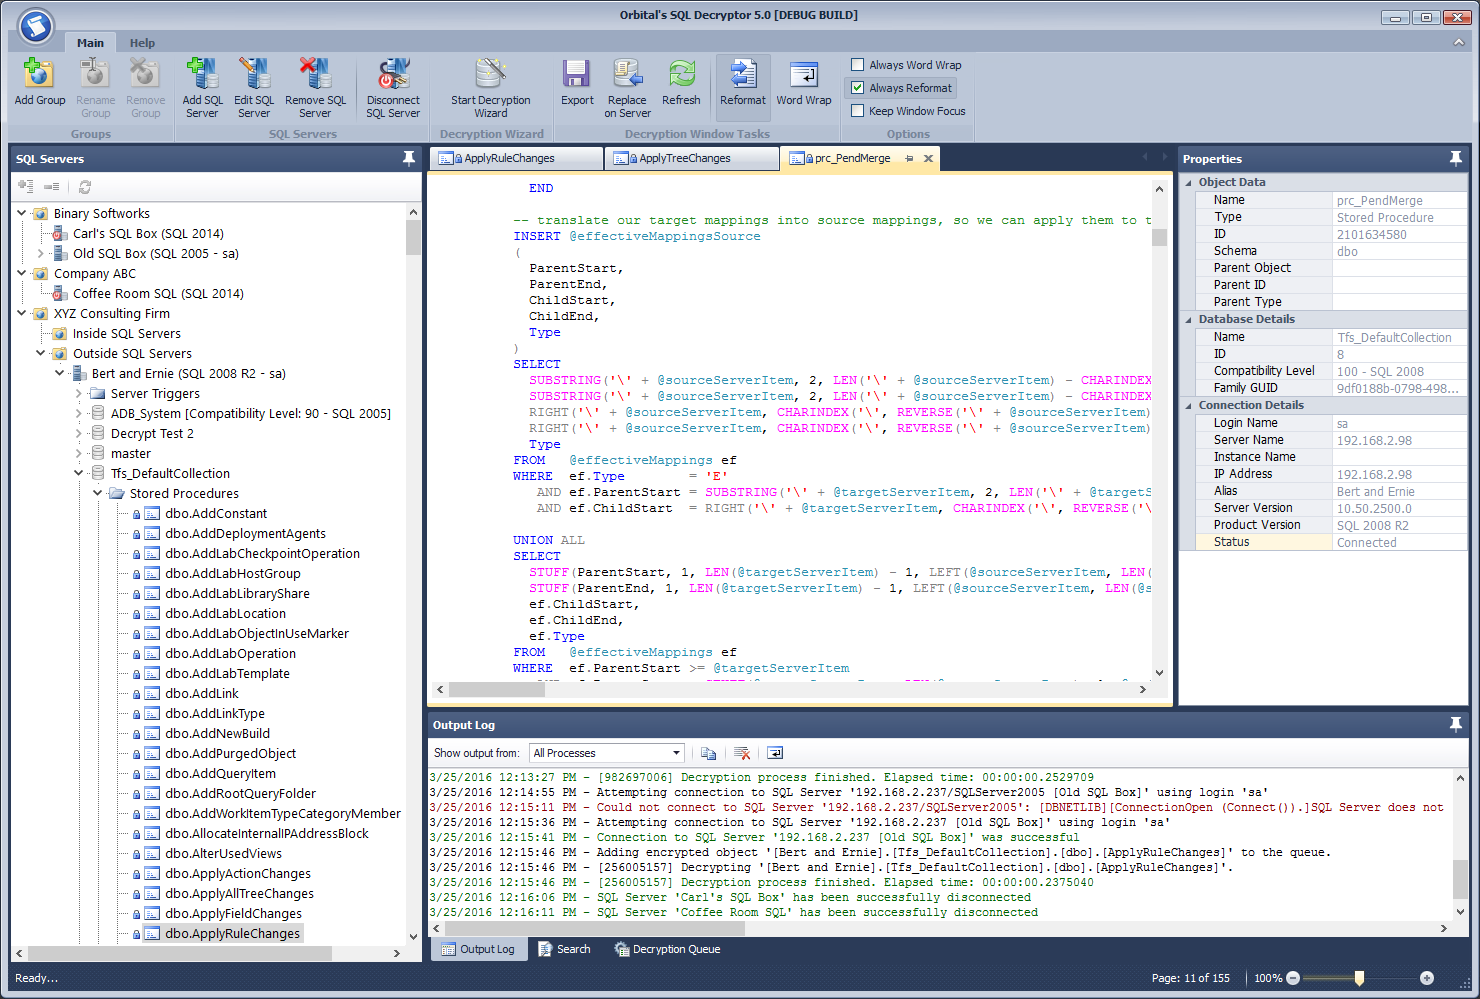 Windows 7 Orbital's SQL Decryptor 5.0 full